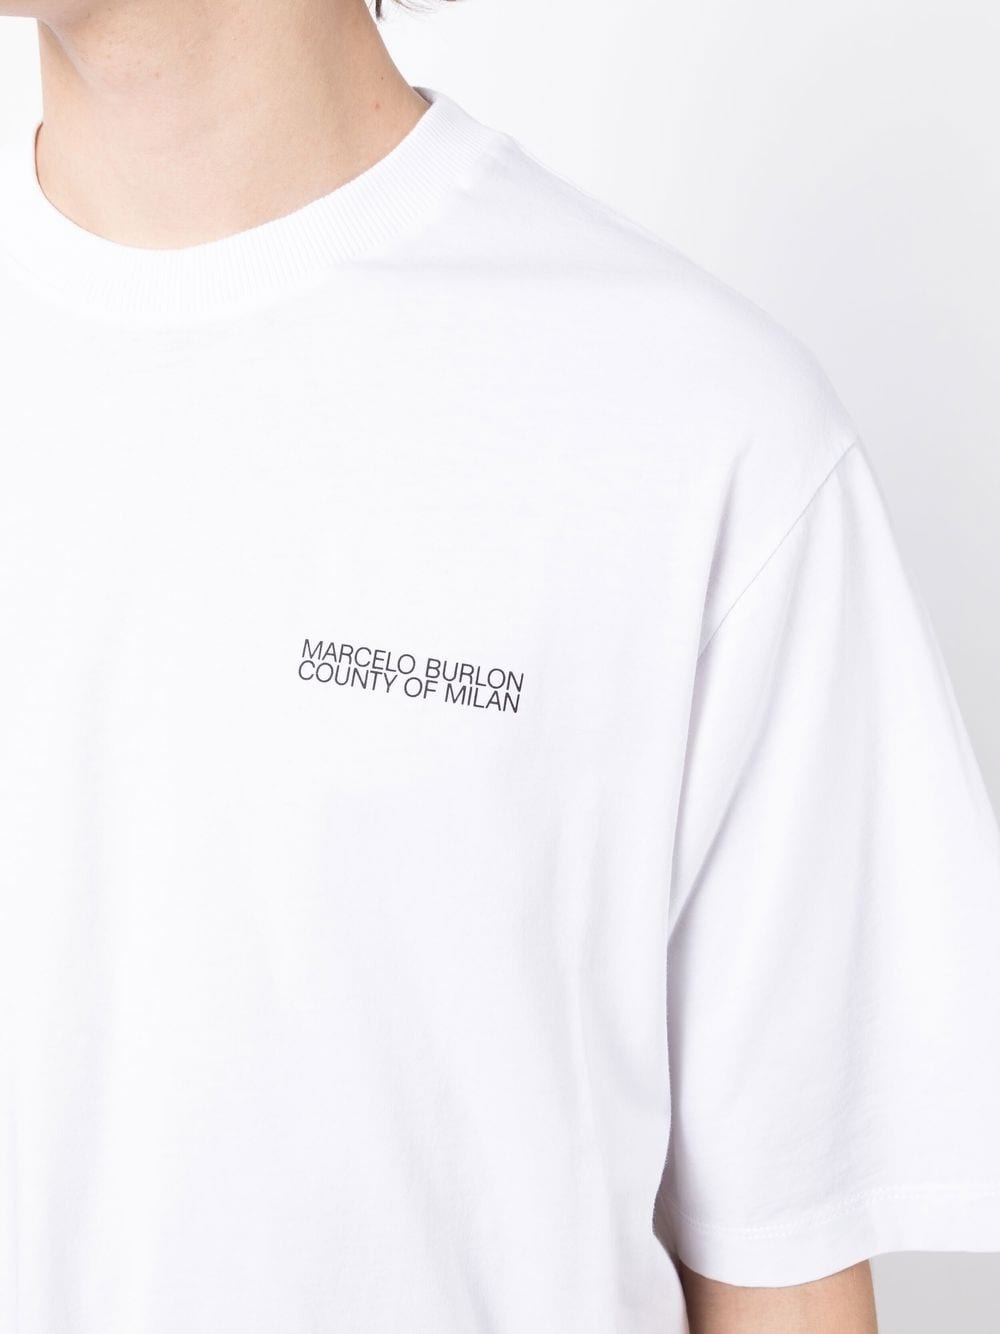 Tempera Cross Over print T-shirt - 5